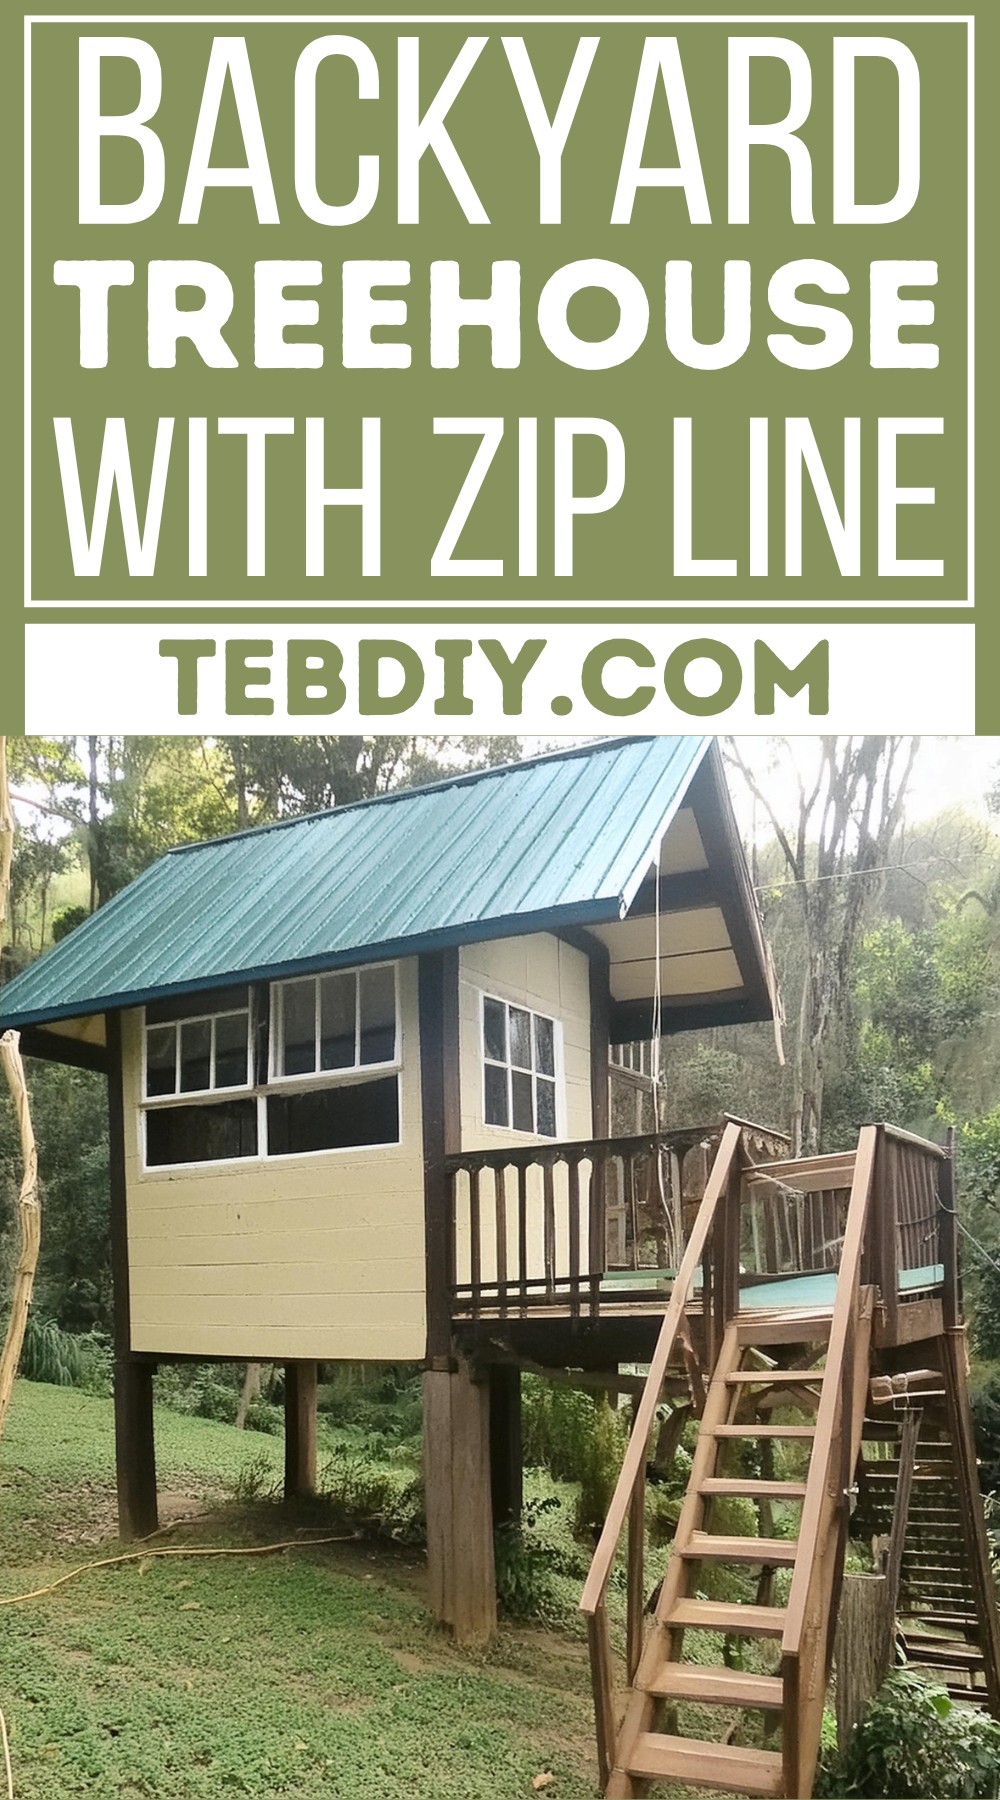 Backyard Treehouse With Zip Line